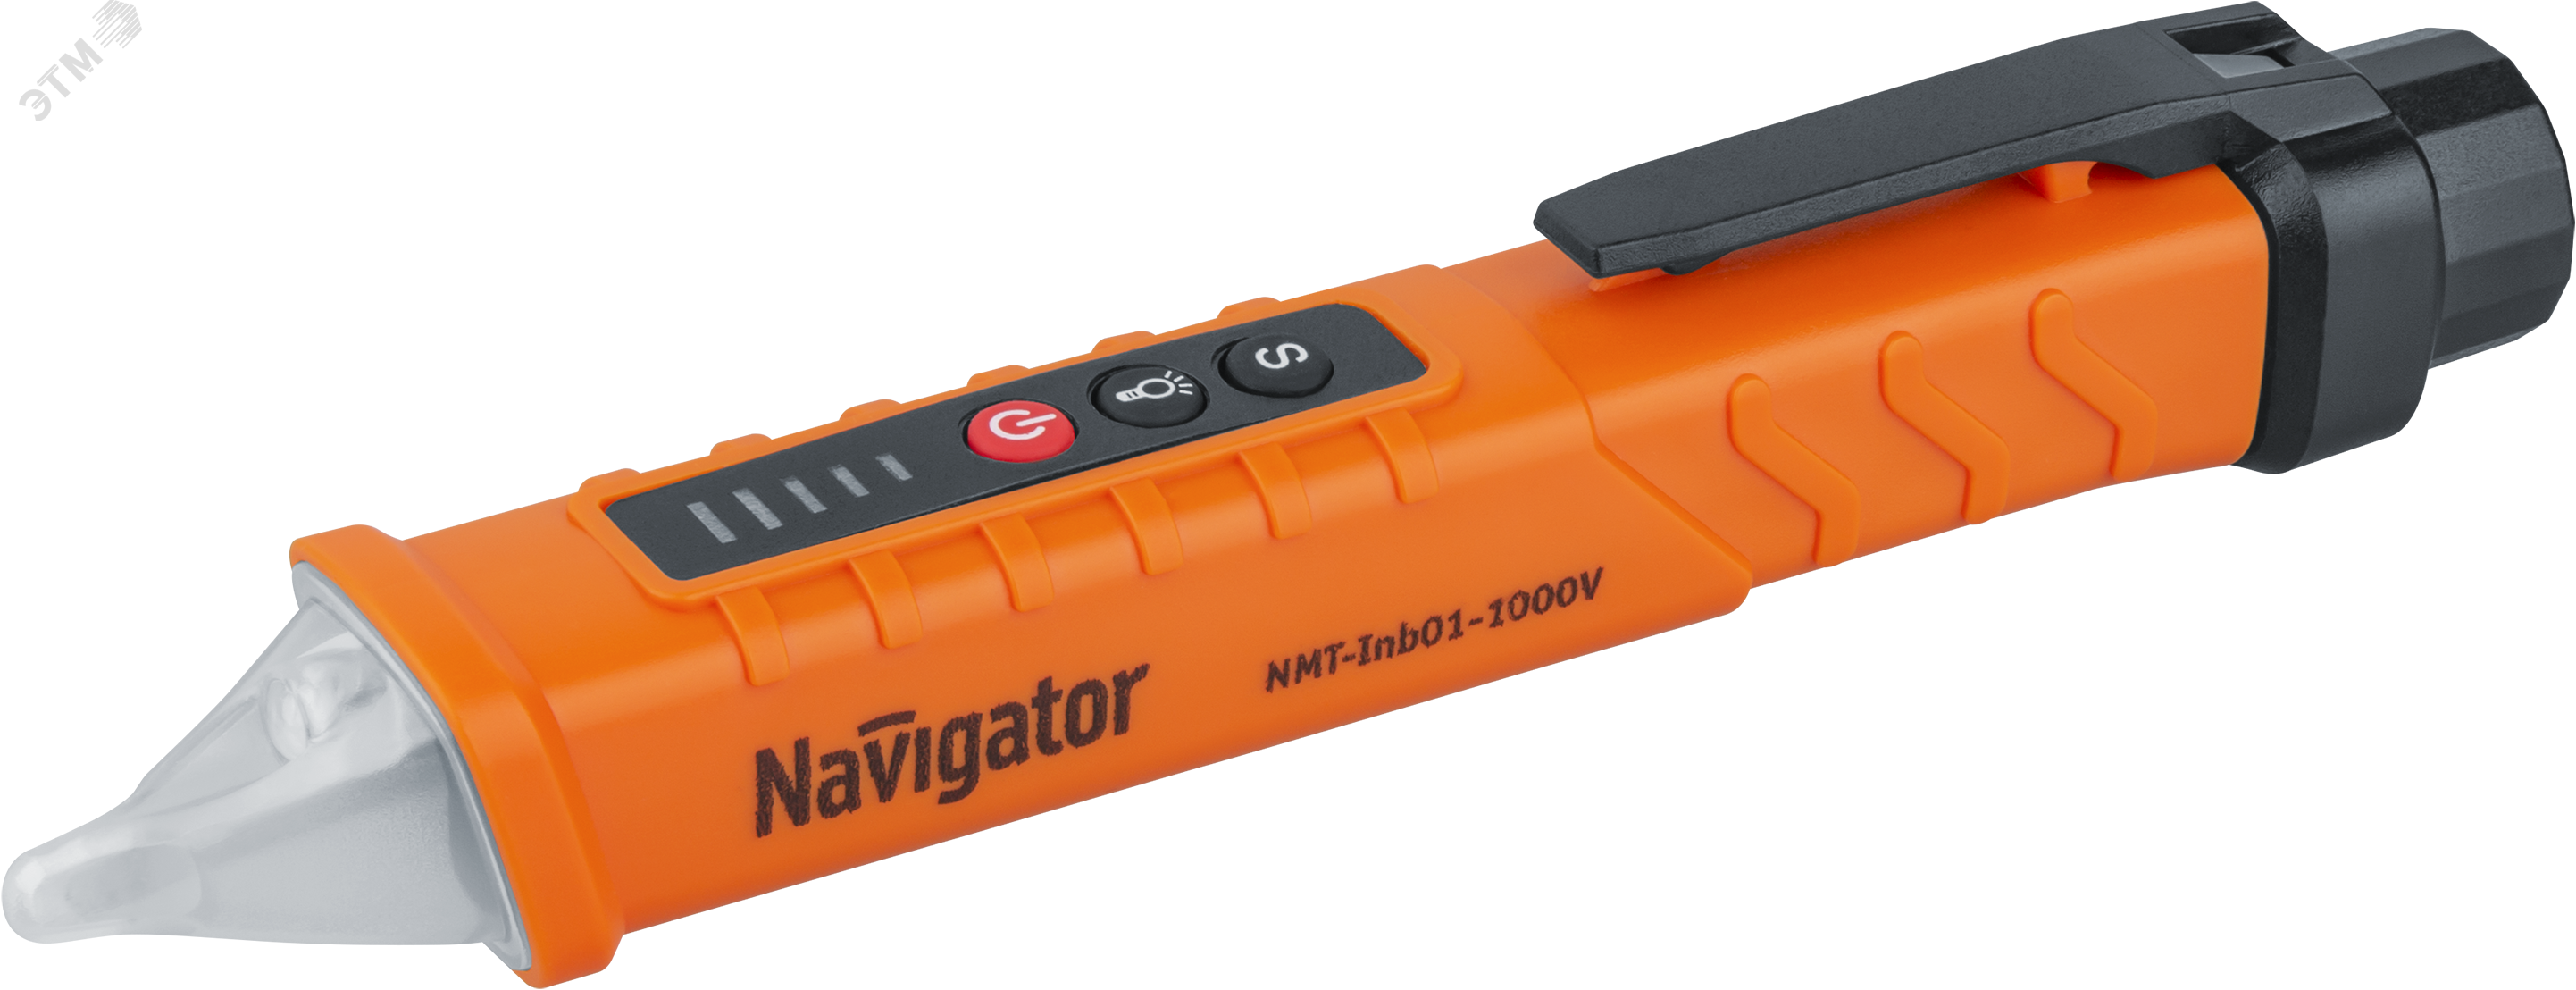 Индикаторы Navigator 93 237 NMT-Inb01-1000V (бесконтактный, 1000 В) 93237 Navigator Group